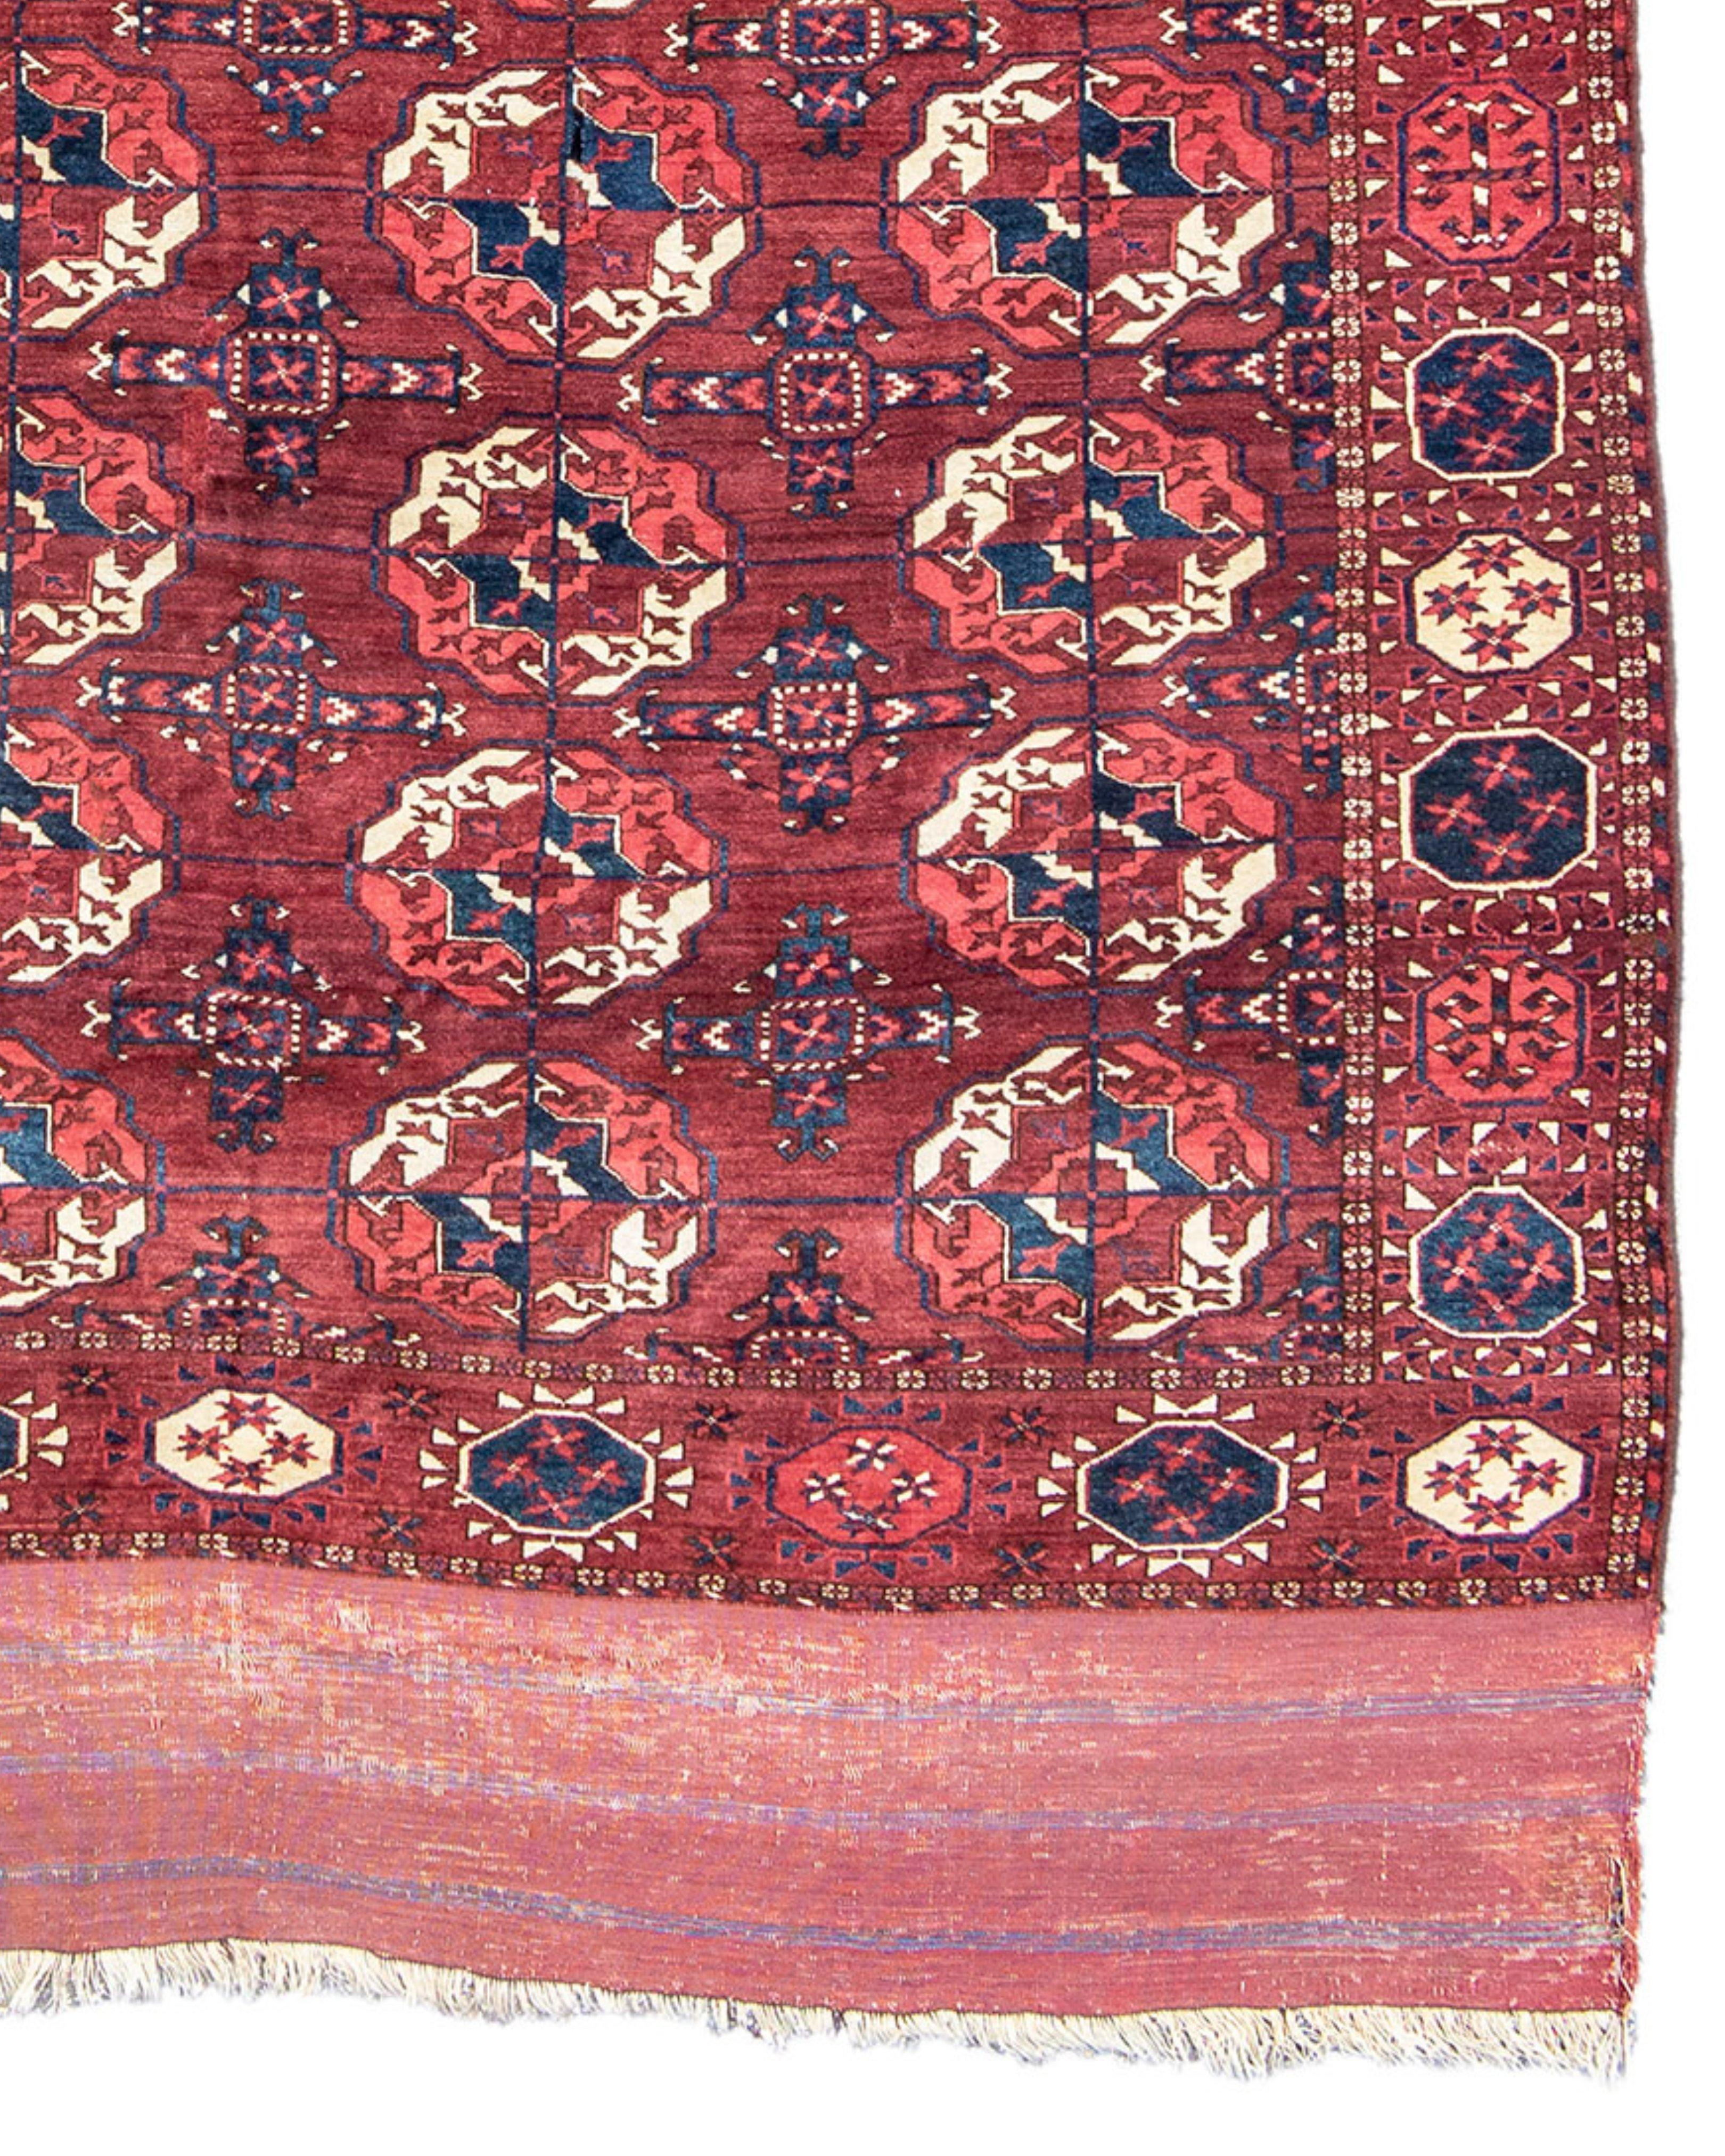 Tekke Main Carpet, 19th Century

Additional Information:
Dimensions: 6'4